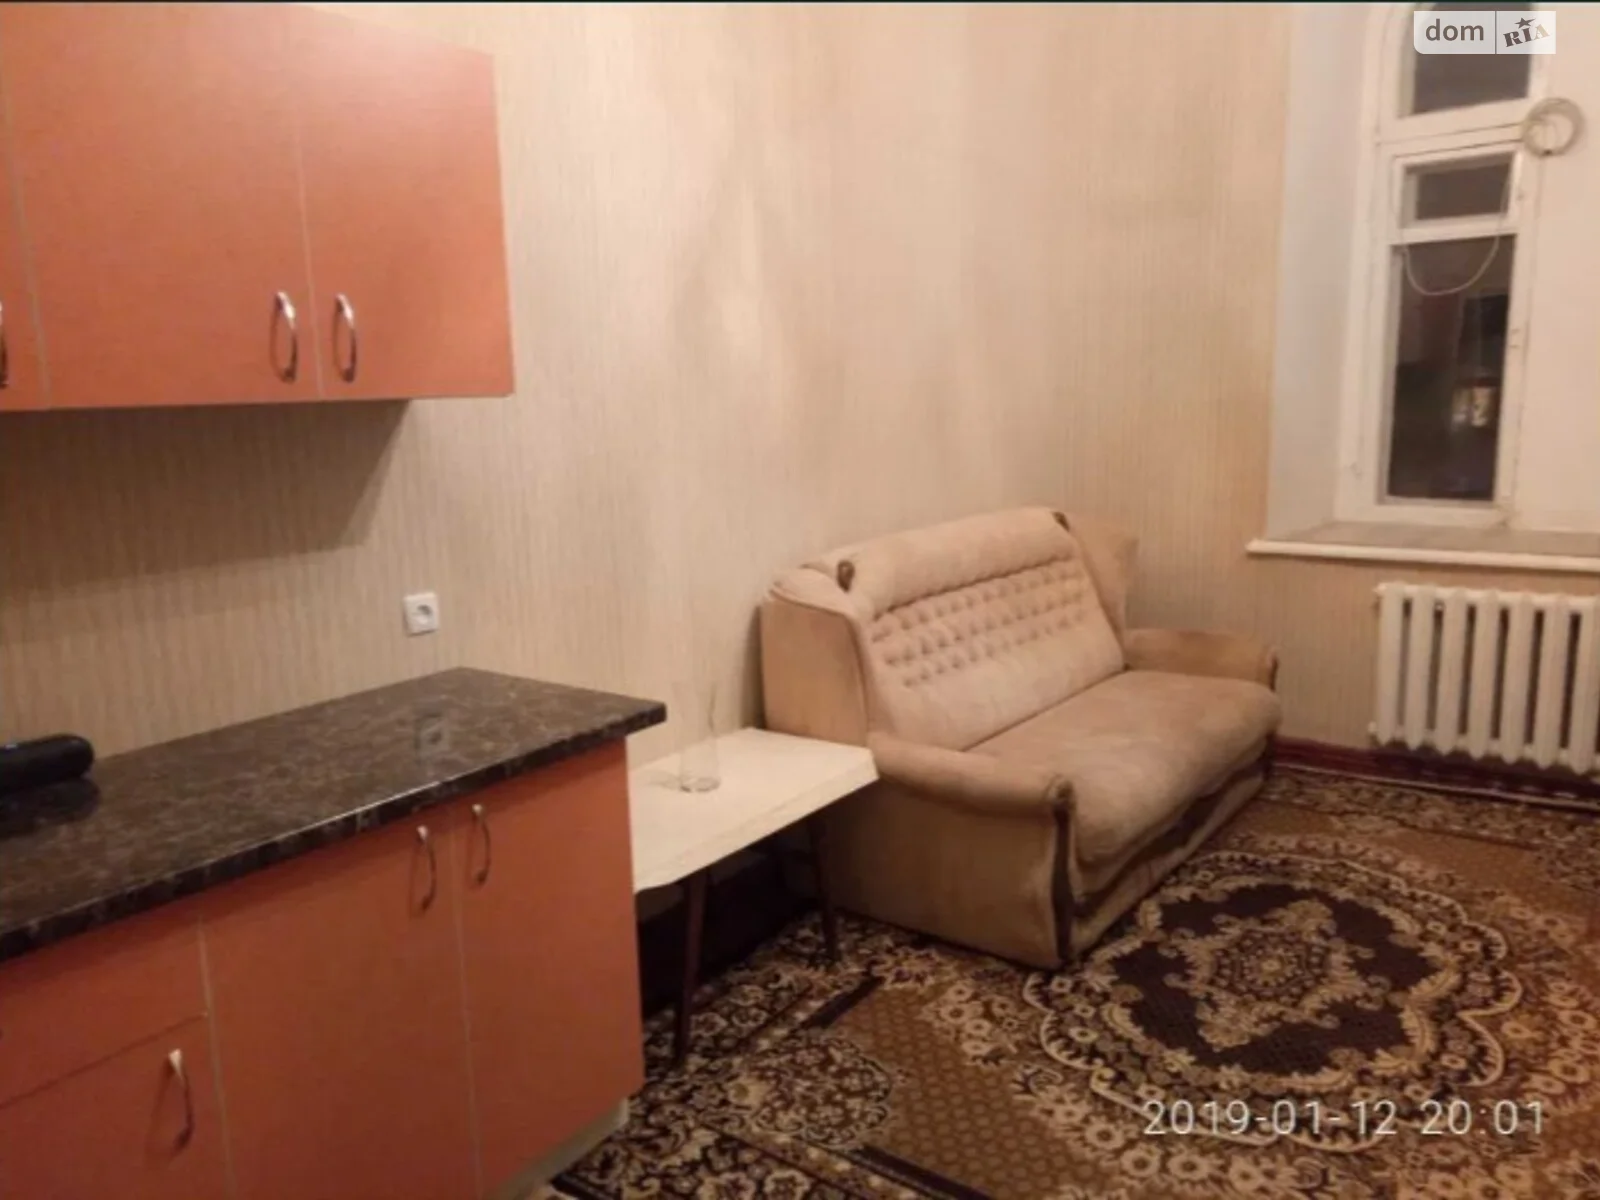 Продается комната 15 кв. м в Одессе, цена: 11500 $ - фото 1